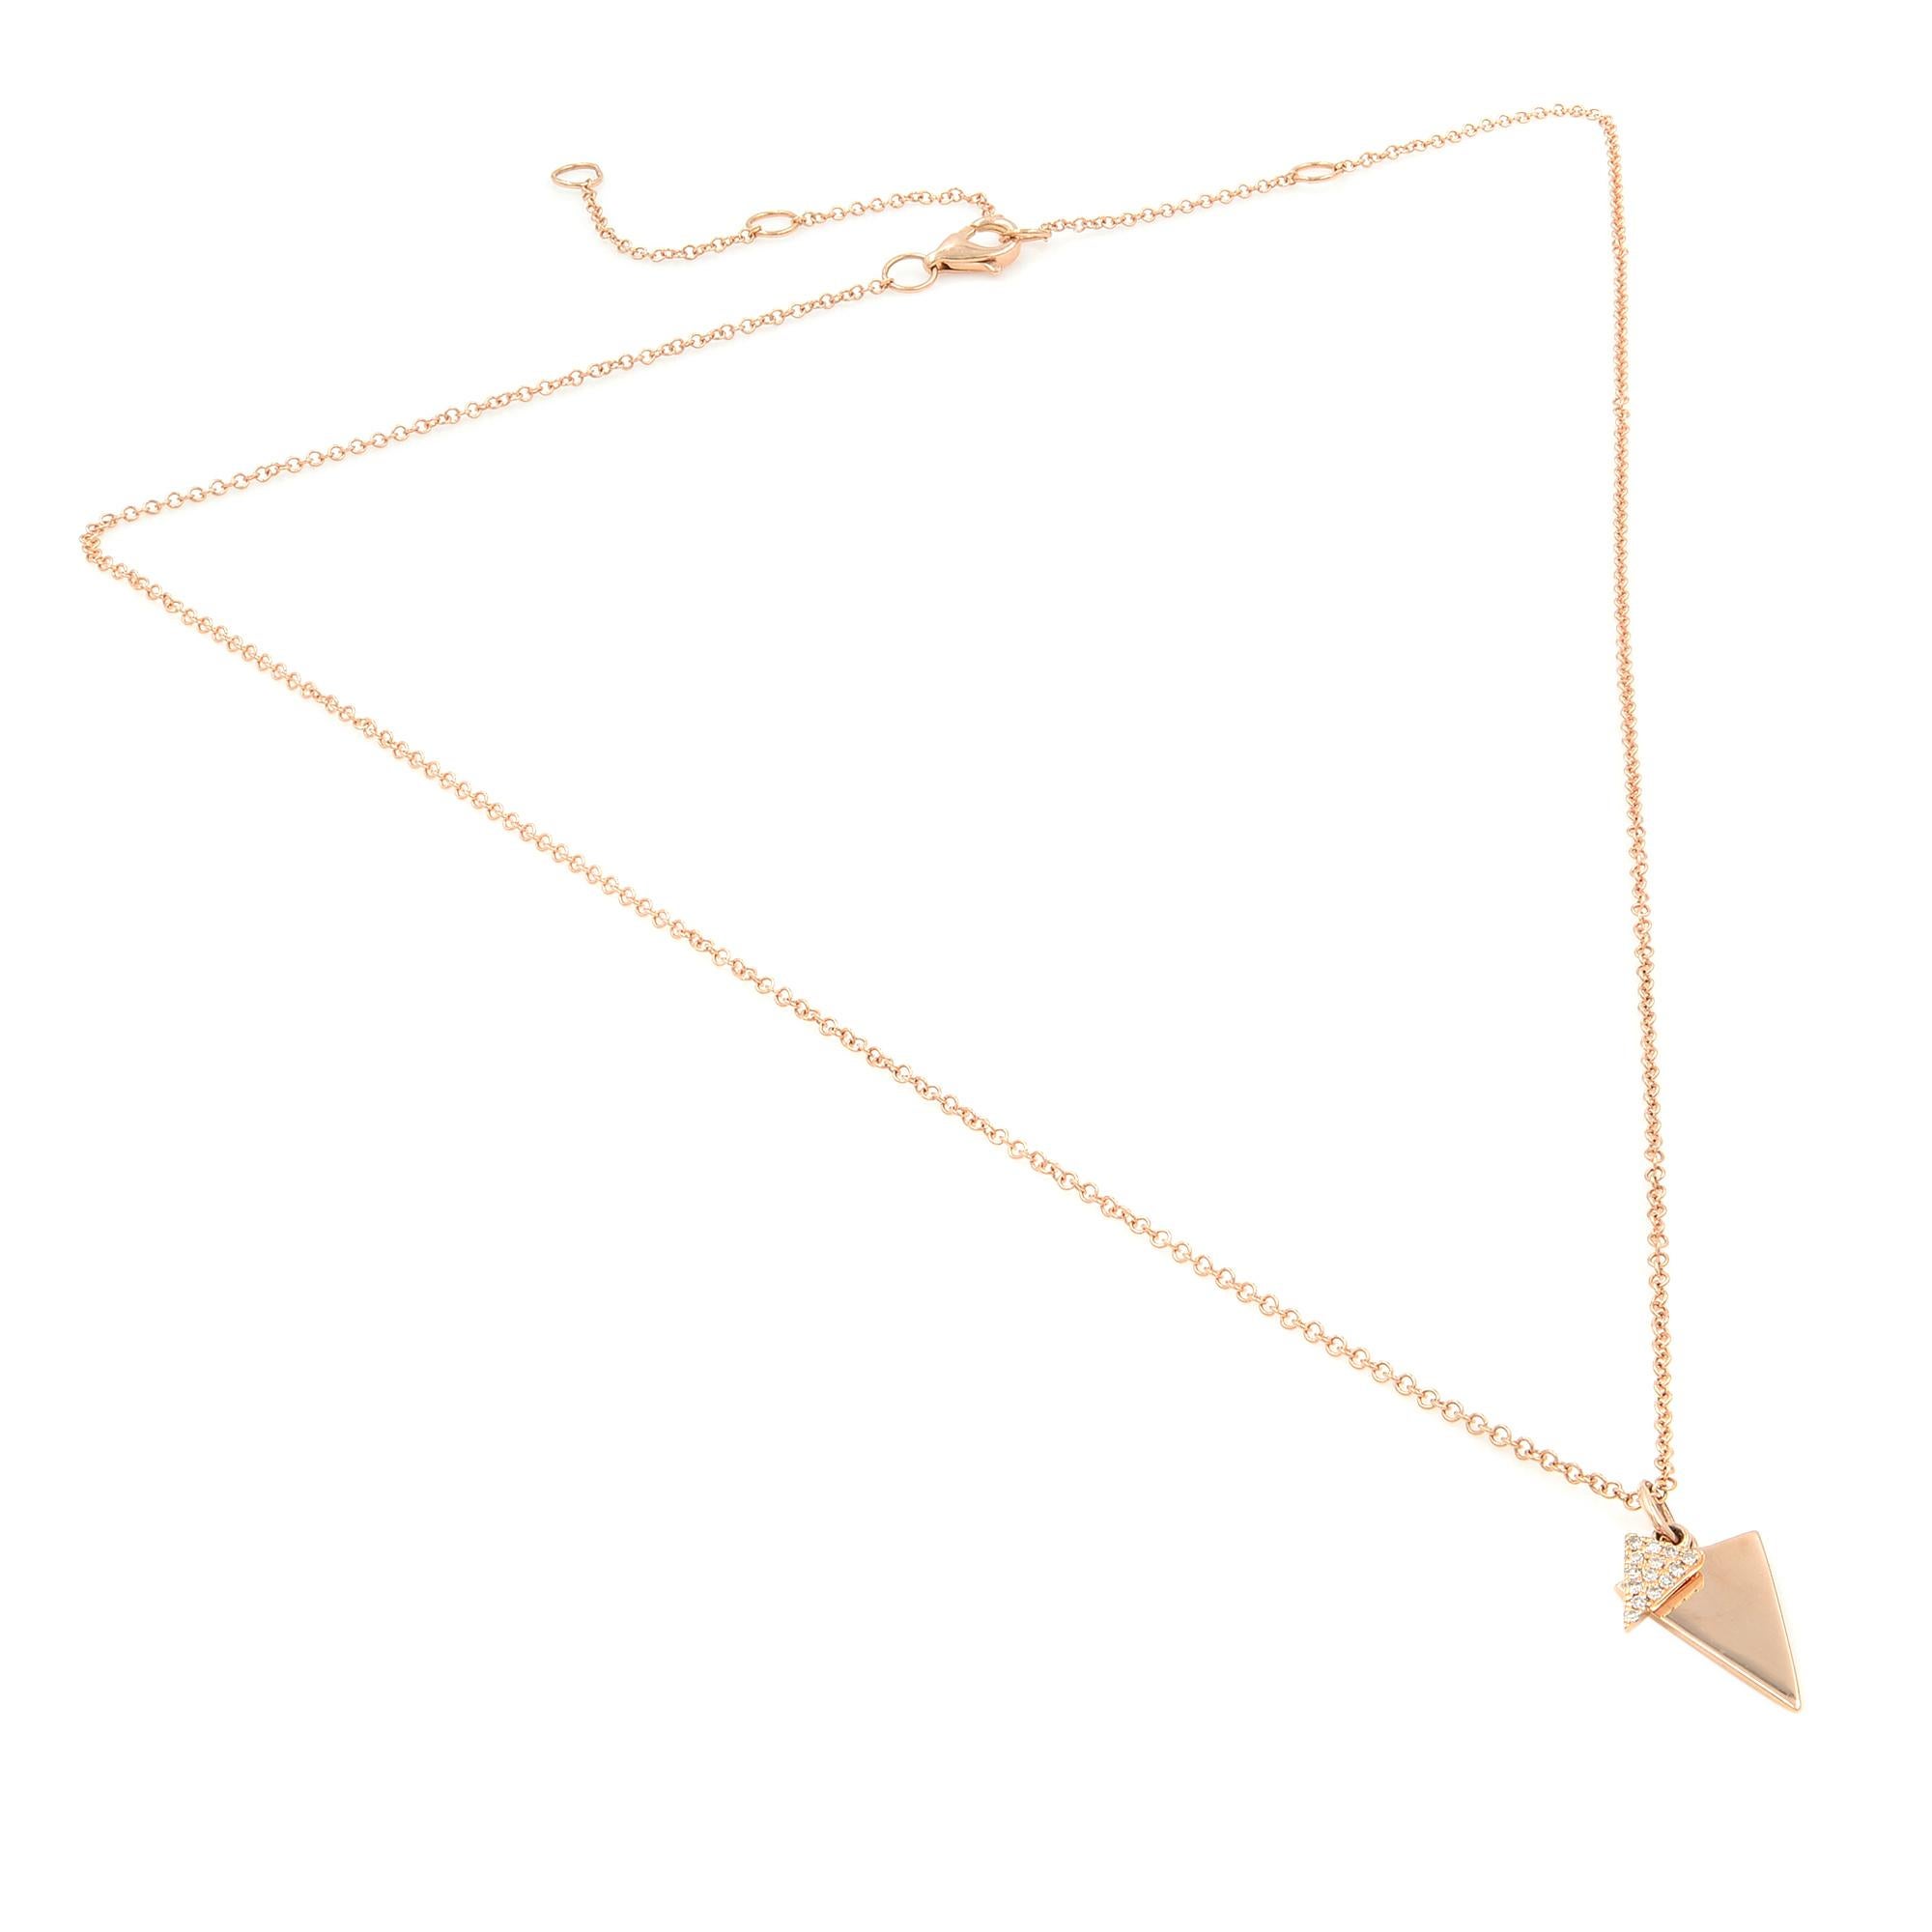 Rachel Koen Diamond Triangle Necklace 14K Rose Gold 0.03Cttw For Sale 1